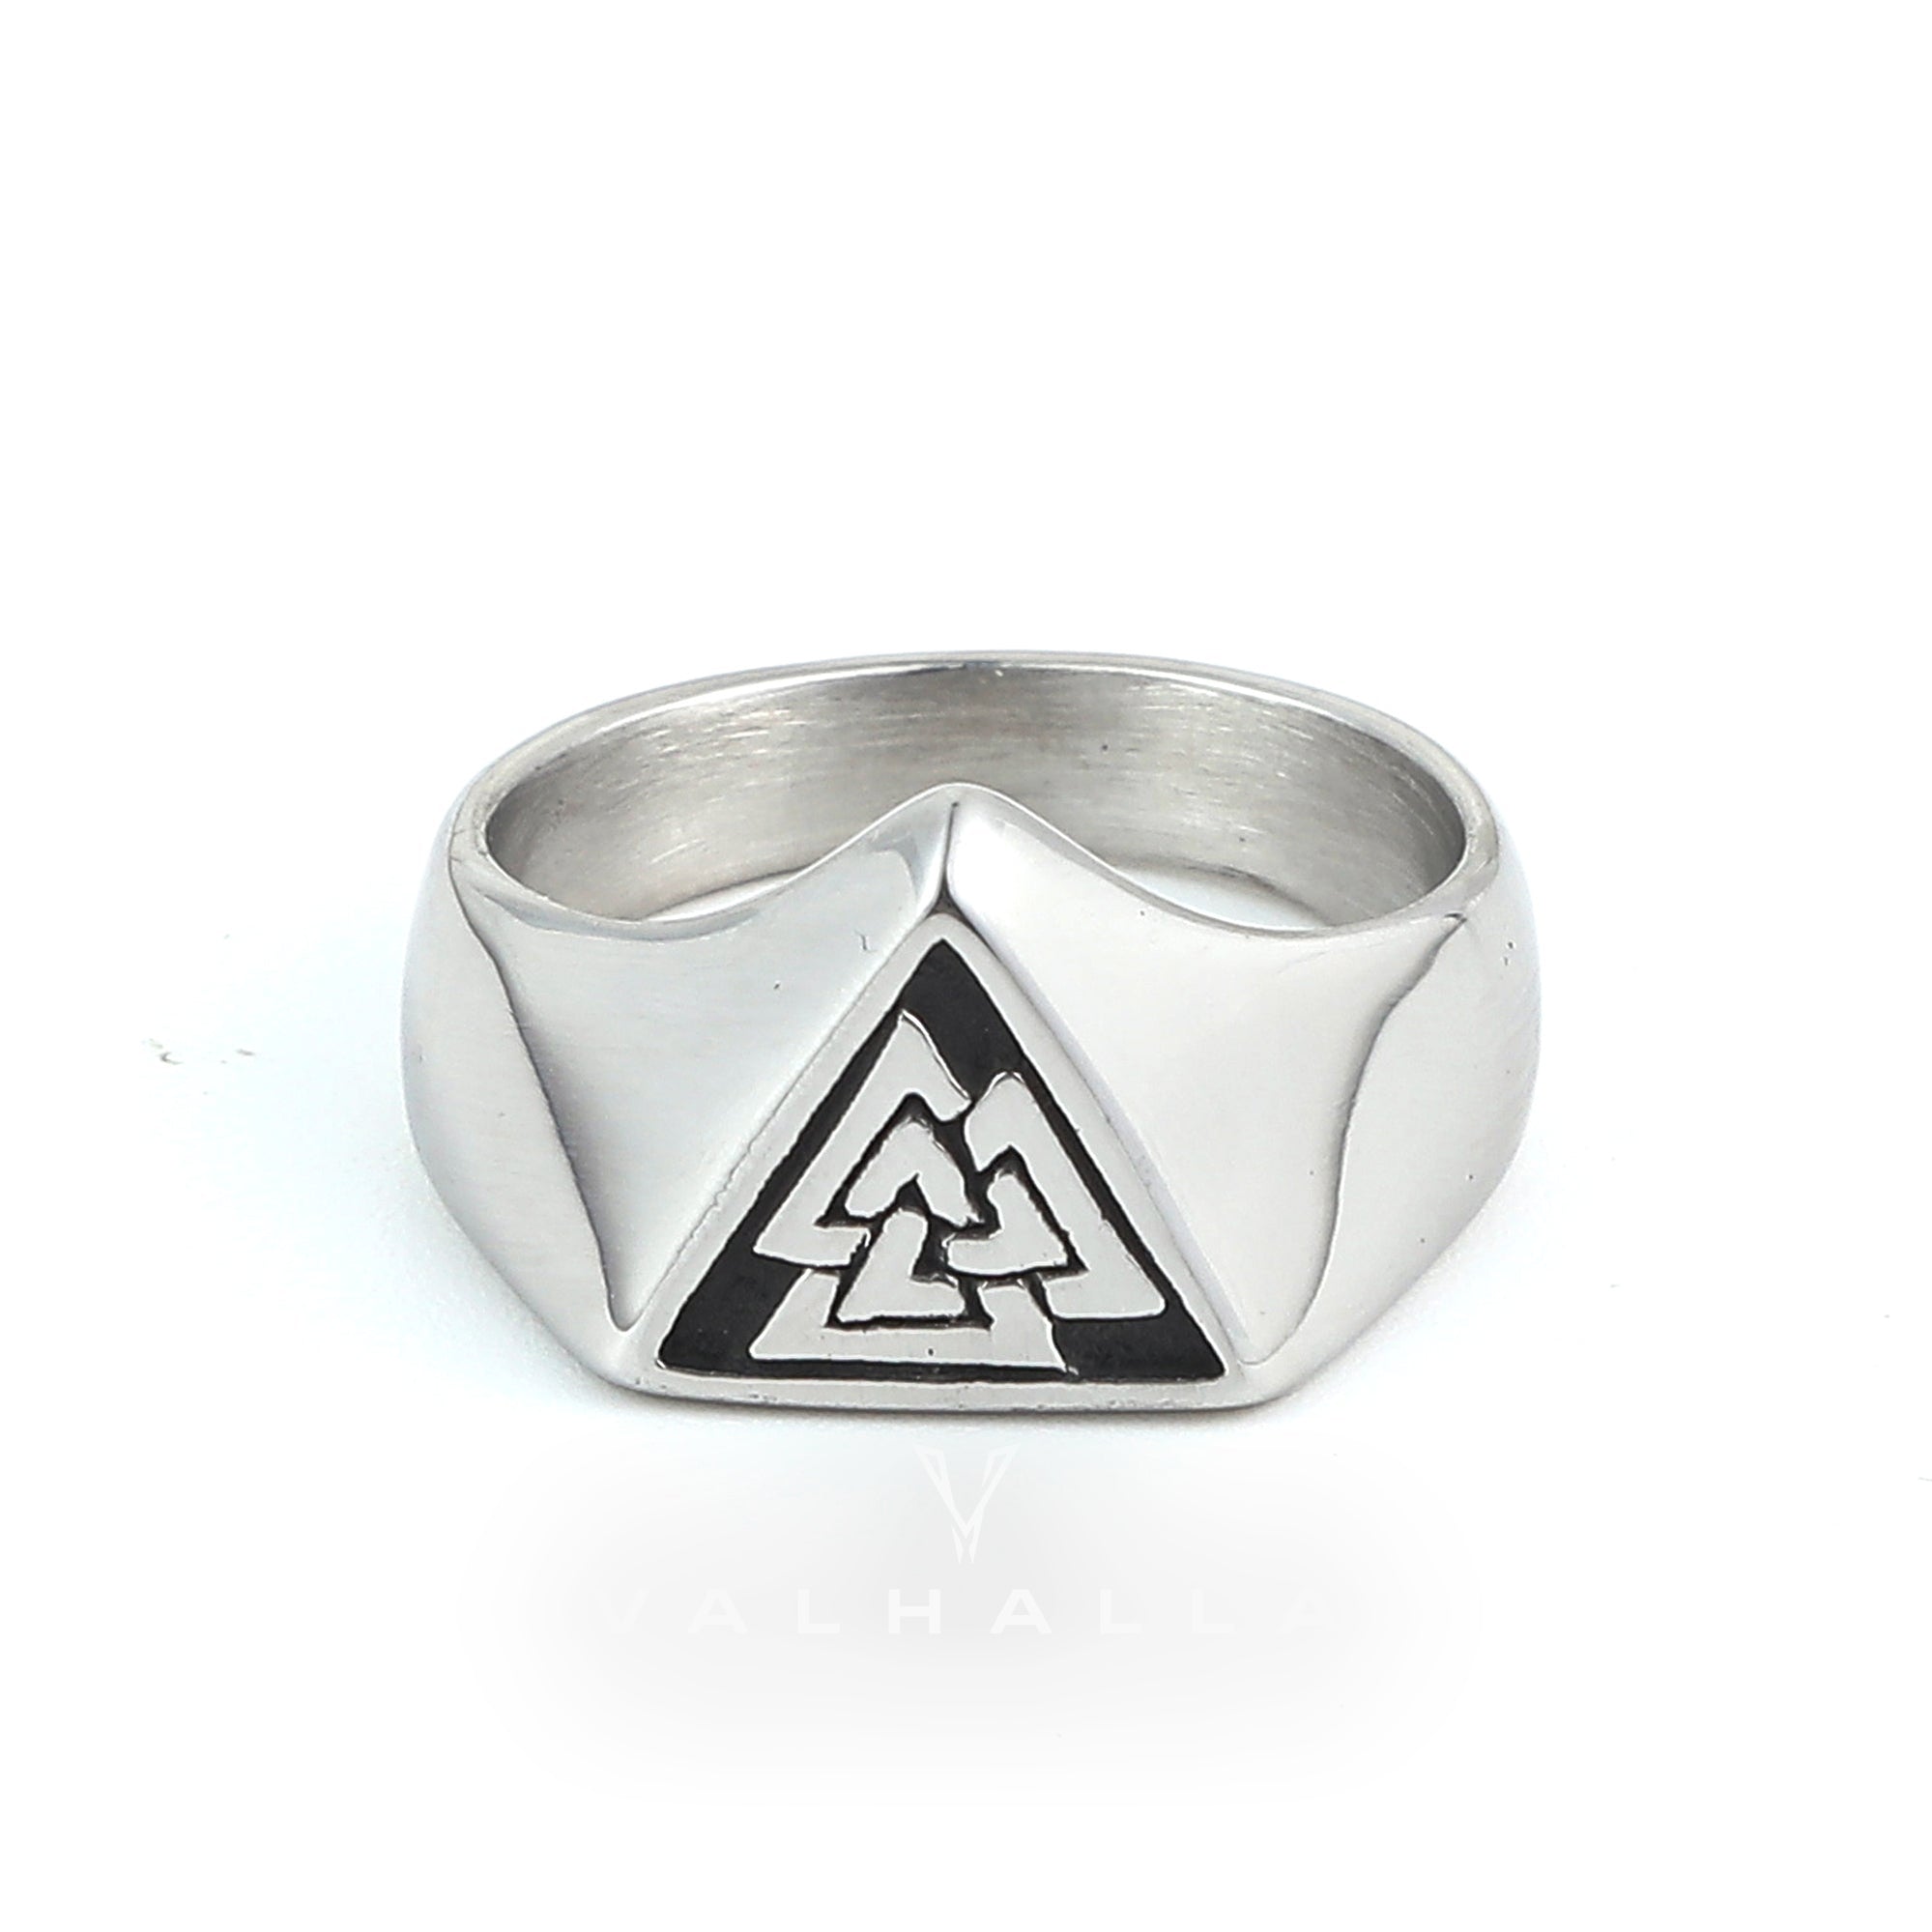 Handcrafted Stainless Steel Triangular Valknut Ring